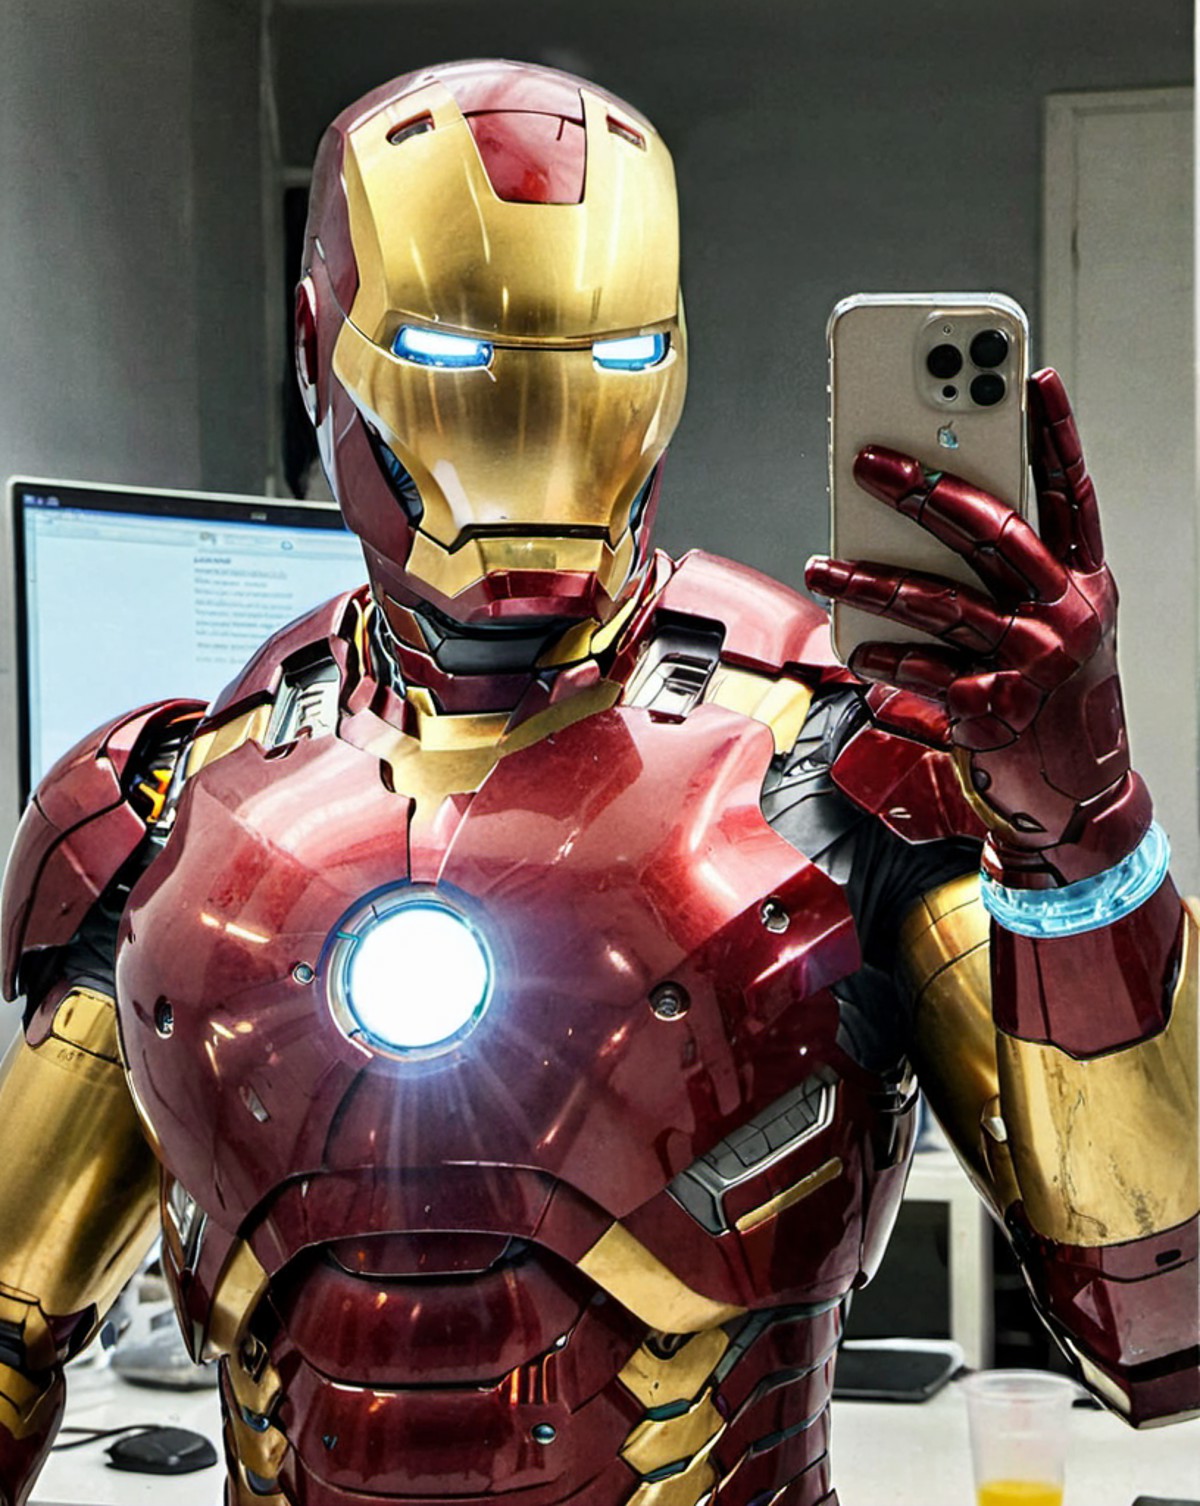 <lora:iphone_mirror_selfie_v01b:1>
((very grainy low resolution amateur:1.2))
 iphone mirror selfie
IronMan holding iphone...